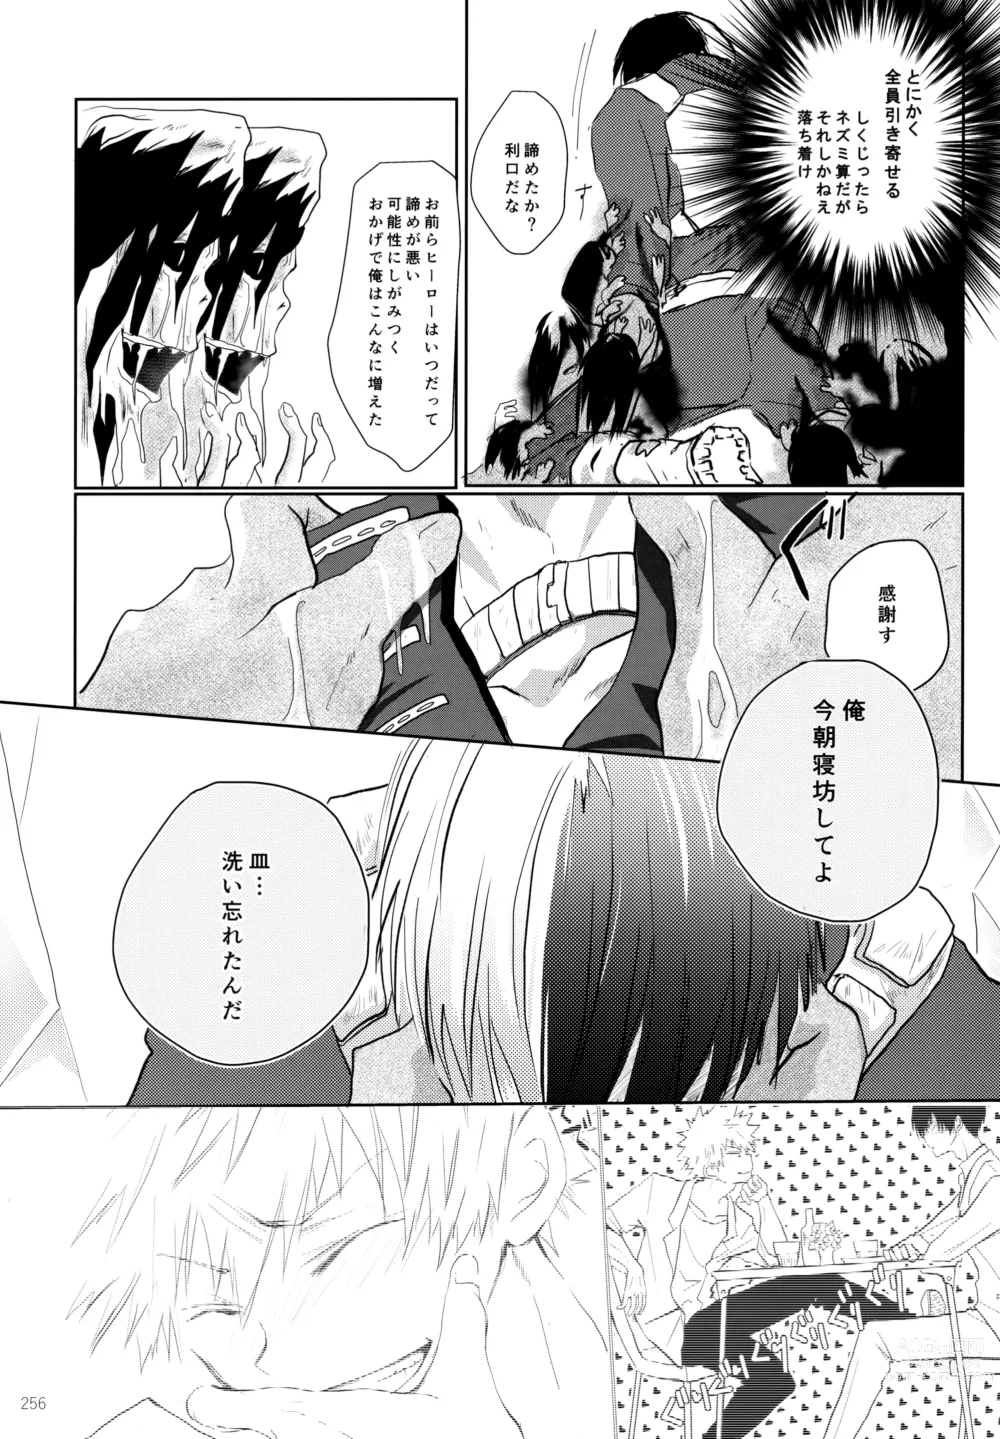 Page 256 of doujinshi Re:Chilled TDBK 2